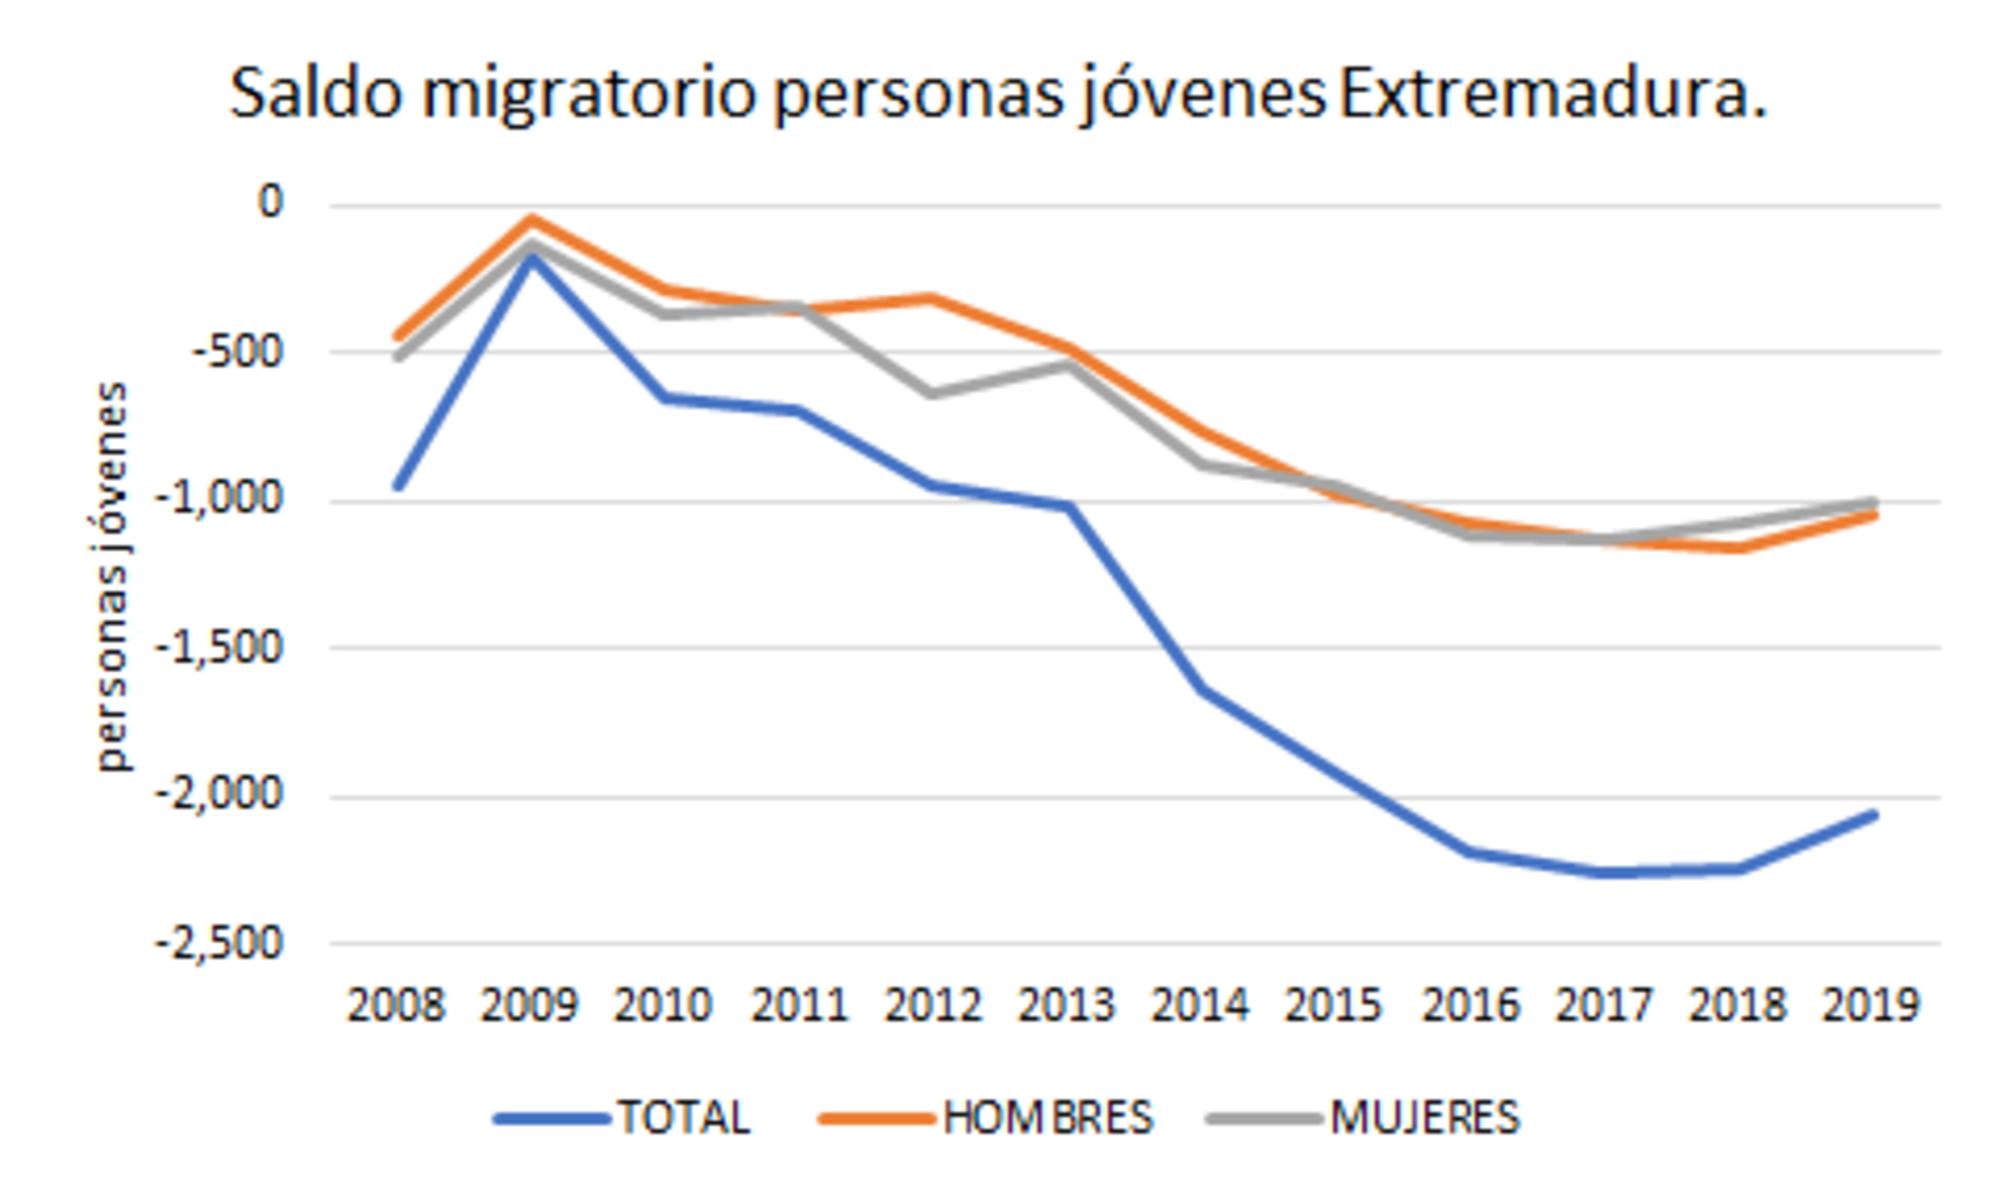 Saldo migratorio personas jóvenes Extremadura